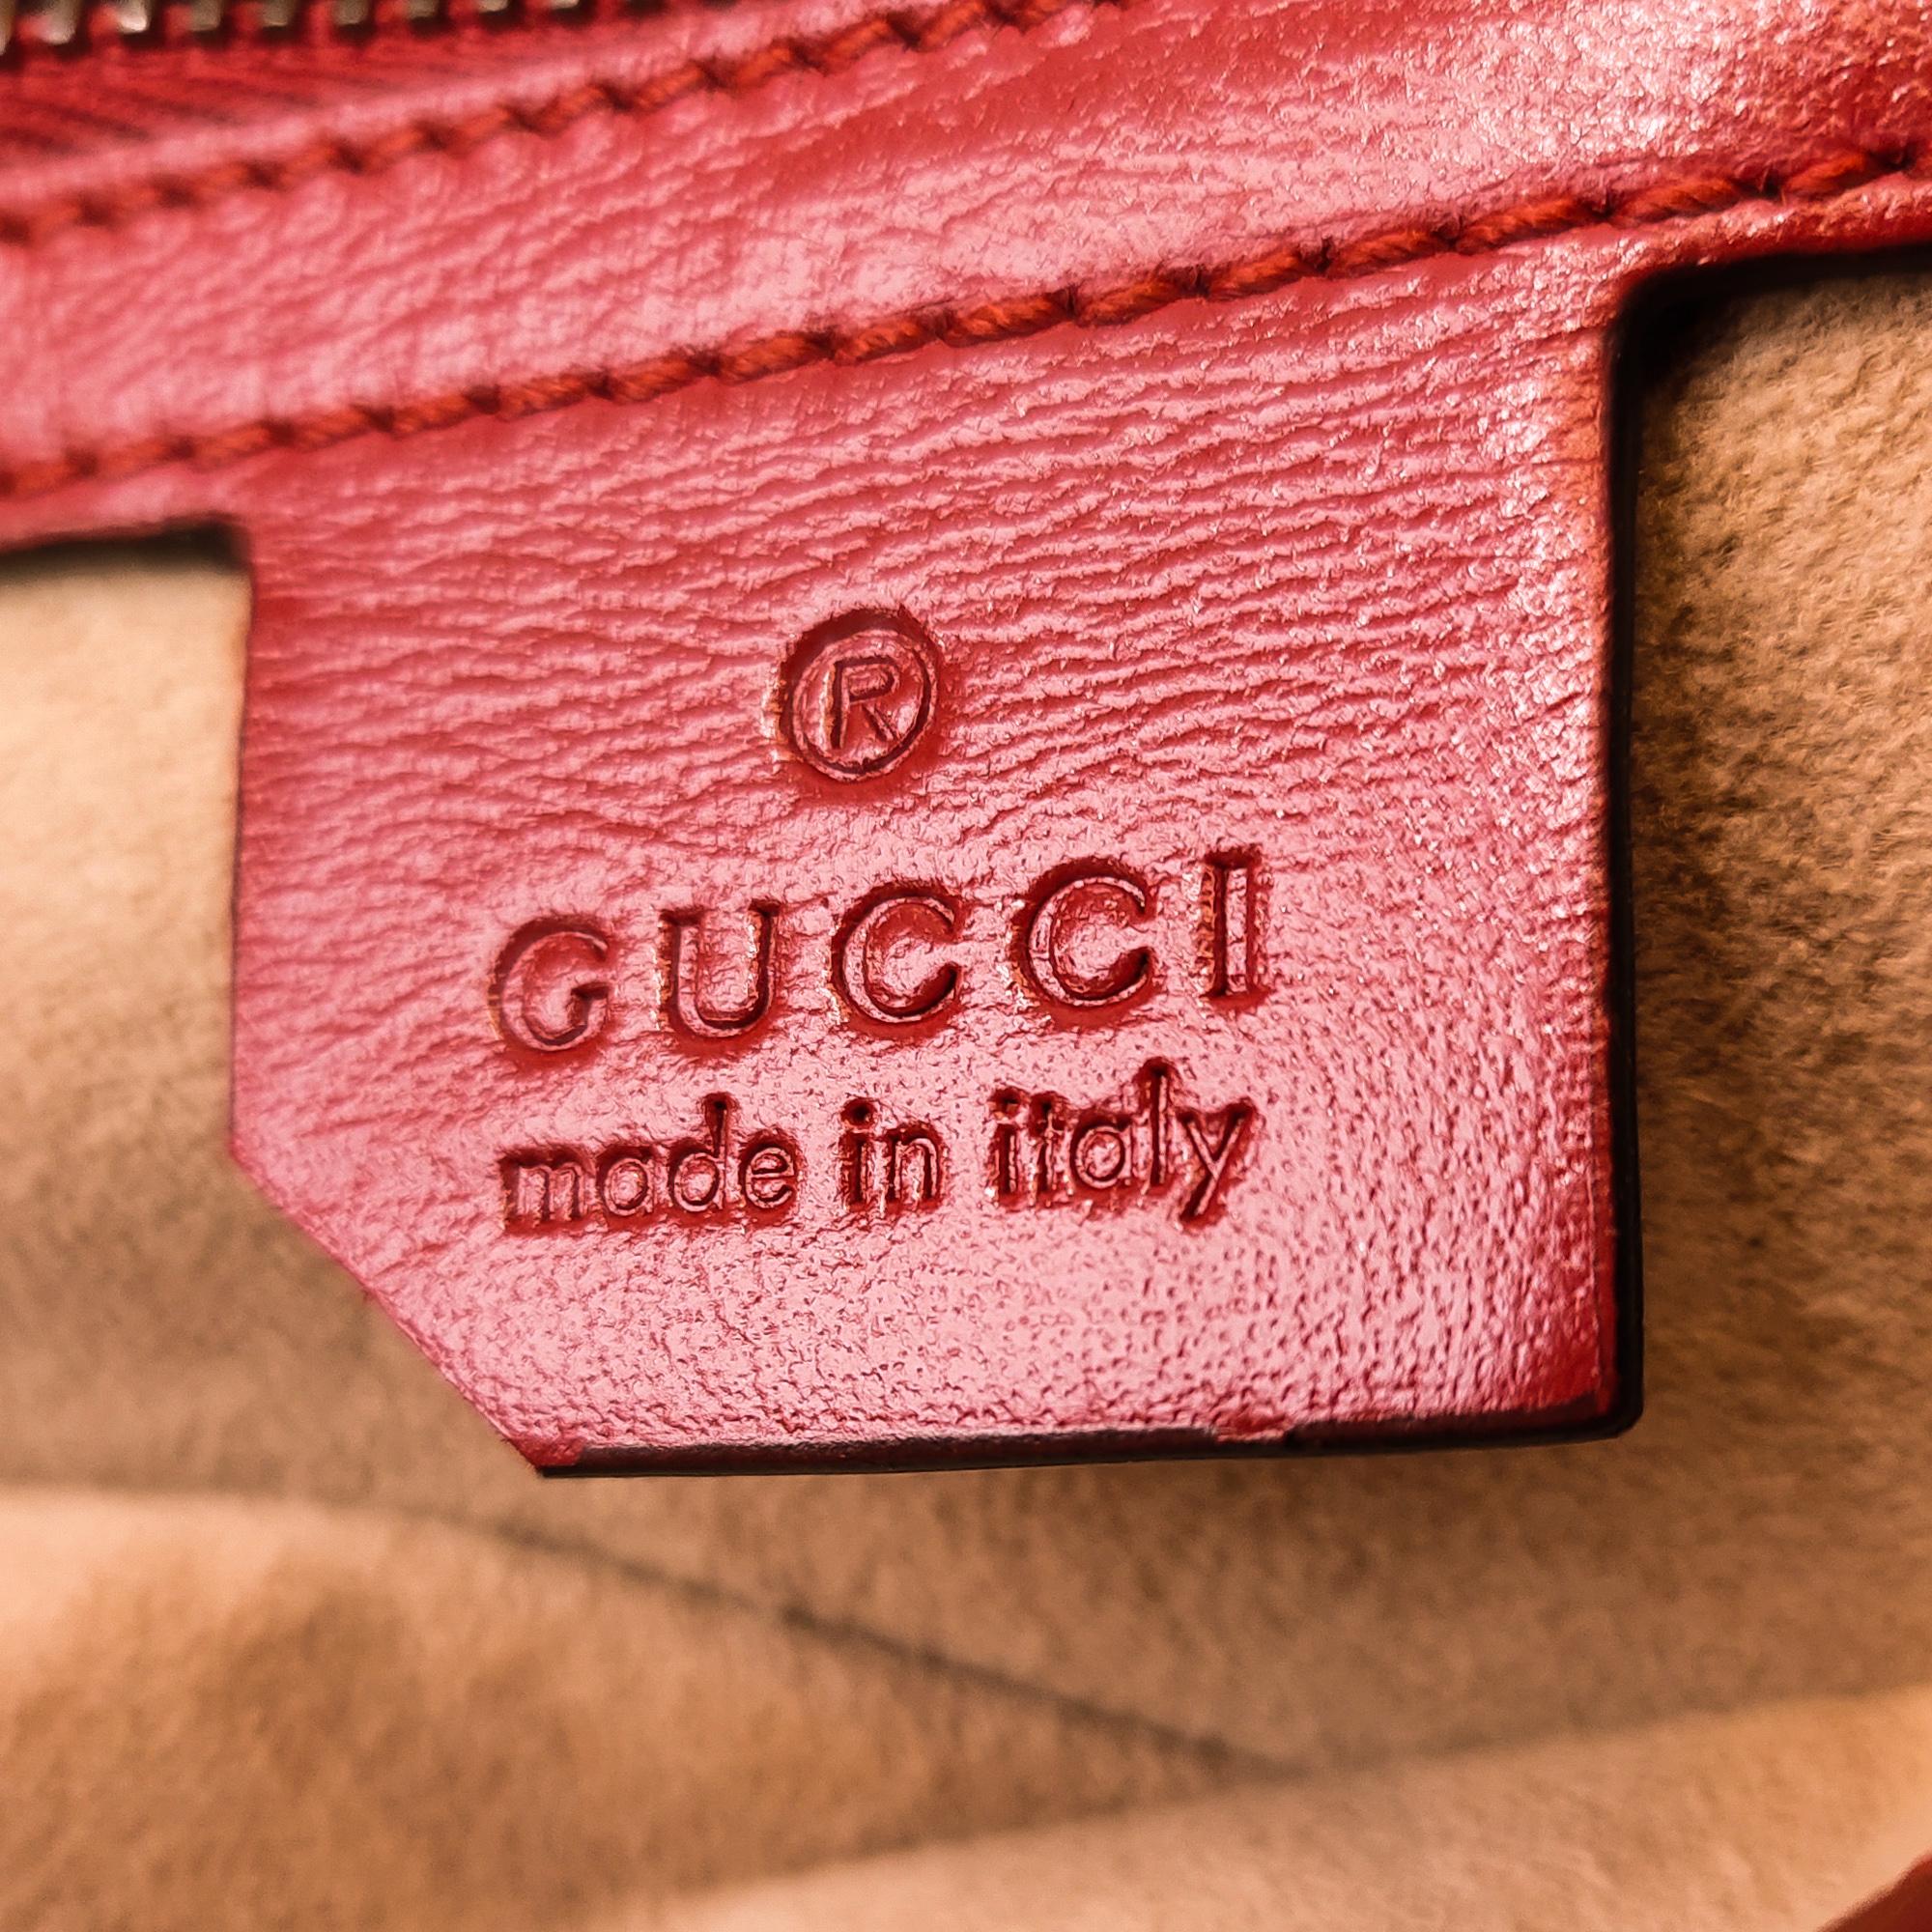 Gucci Red Small GG Marmont Matelasse Crossbody Bag